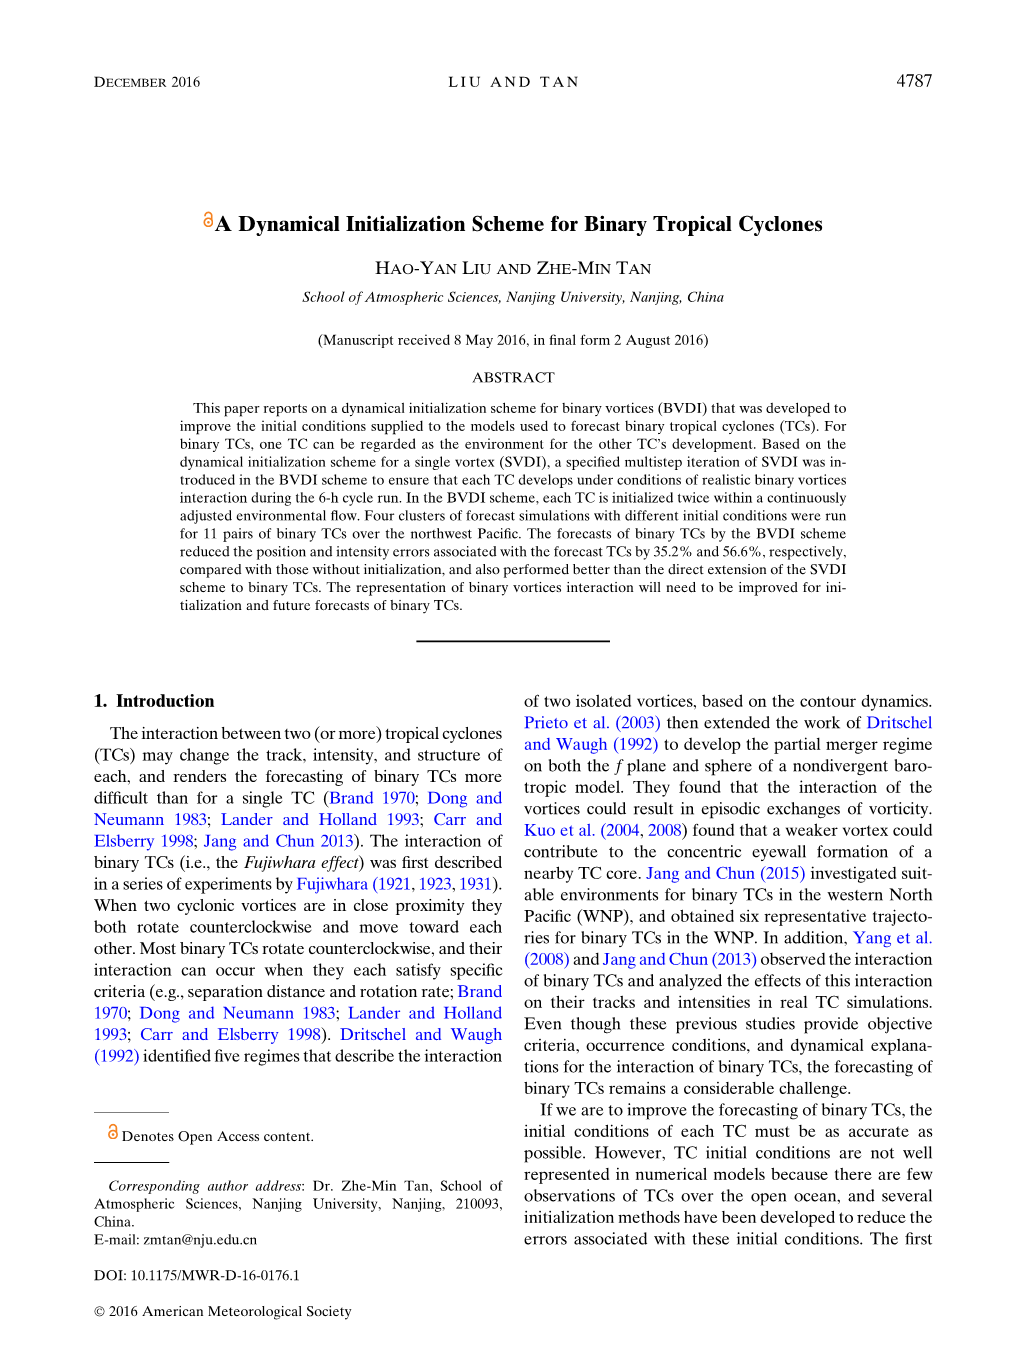 A Dynamical Initialization Scheme for Binary Tropical Cyclones